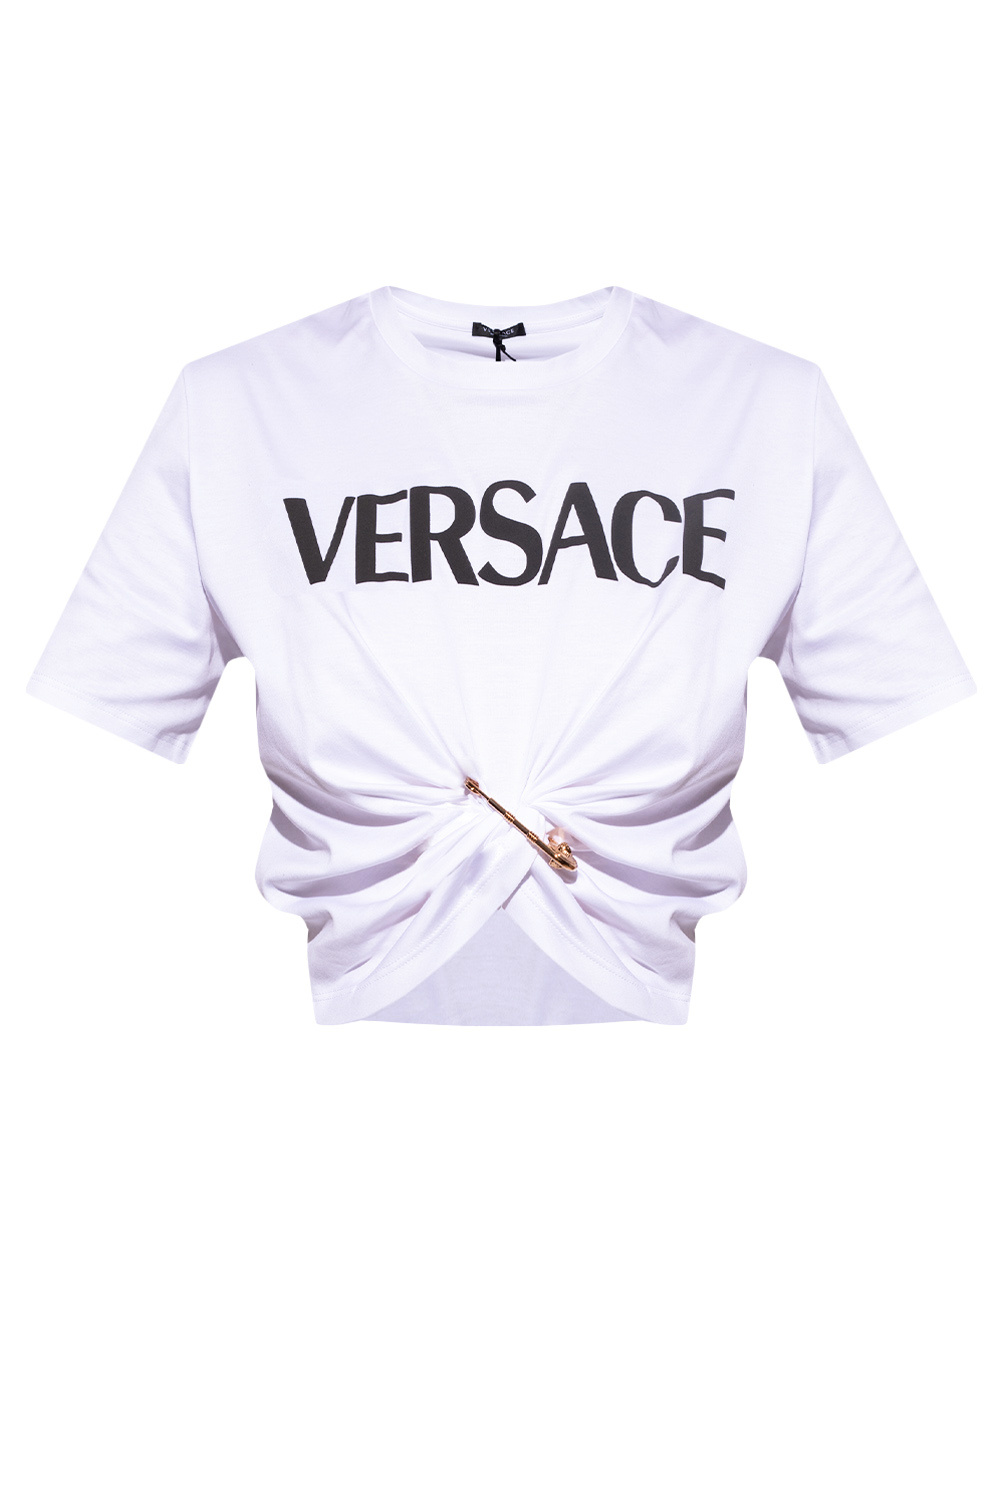 IetpShops Venezuela - St zip dress - Versace midi Sweatshirt Michael aus Baumwolle shirt reiner 